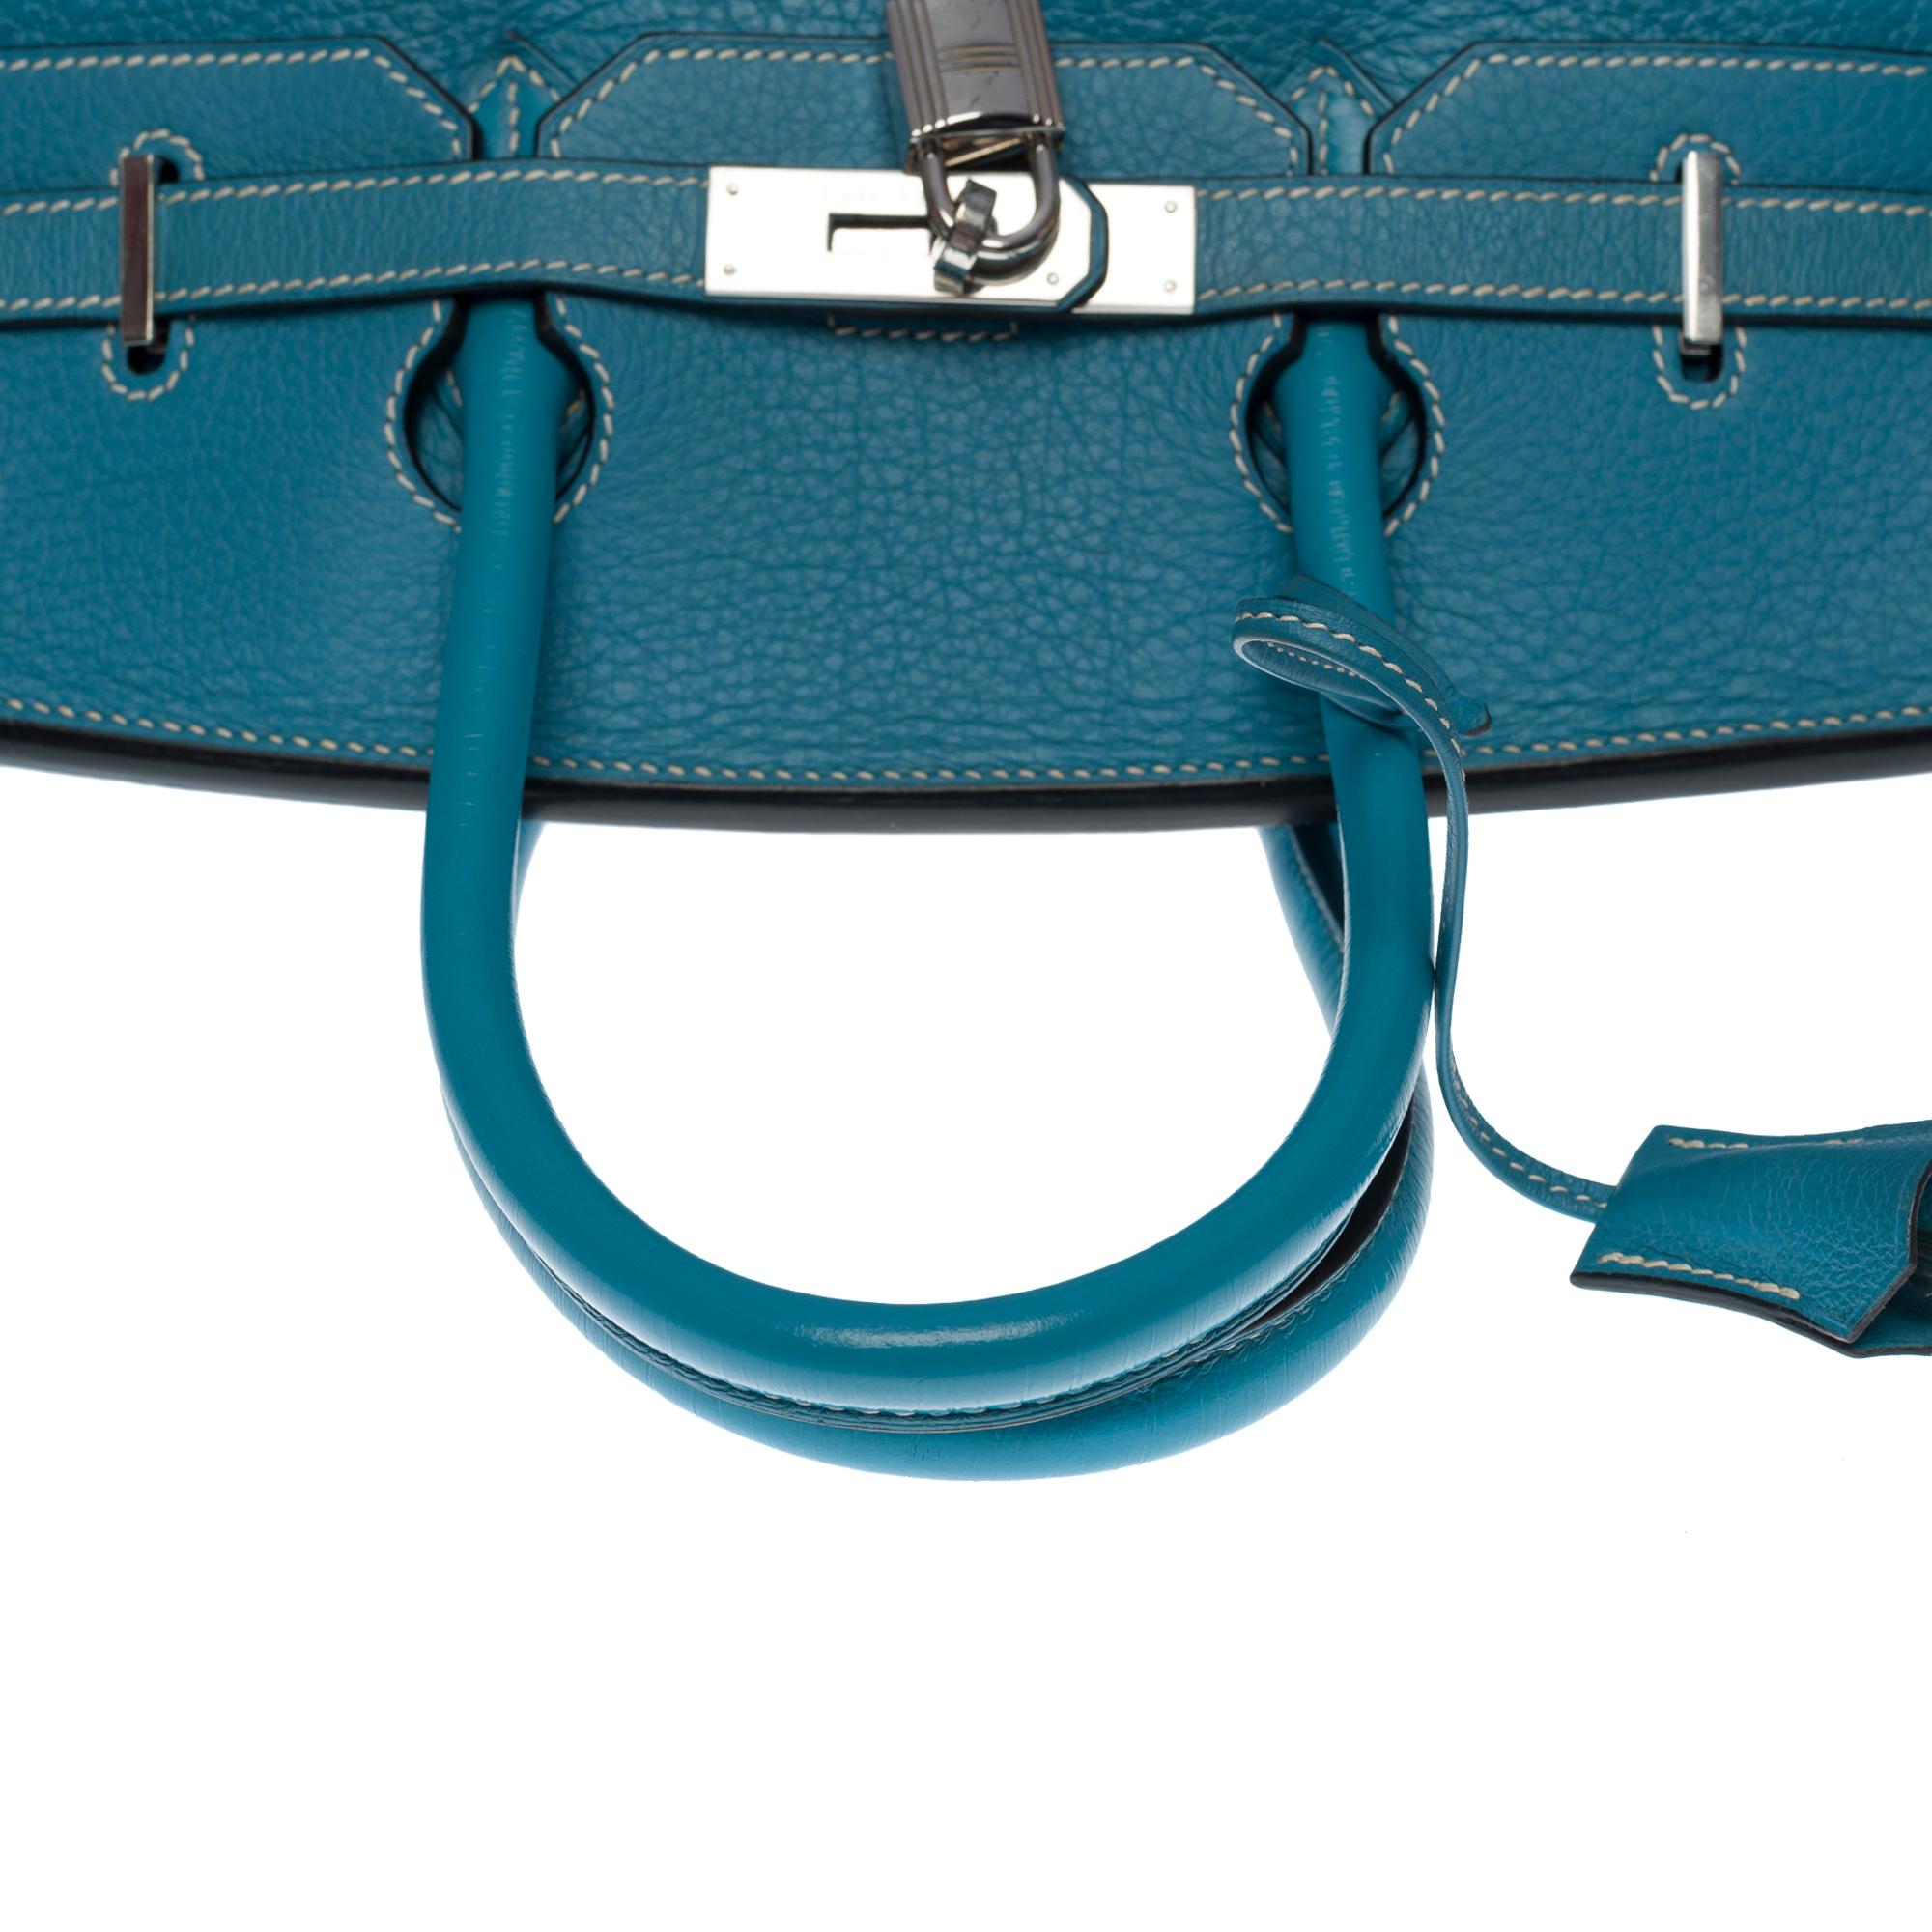 Gorgeous Hermès Birkin 35 handbag in blue jeans Togo leather, SHW  2